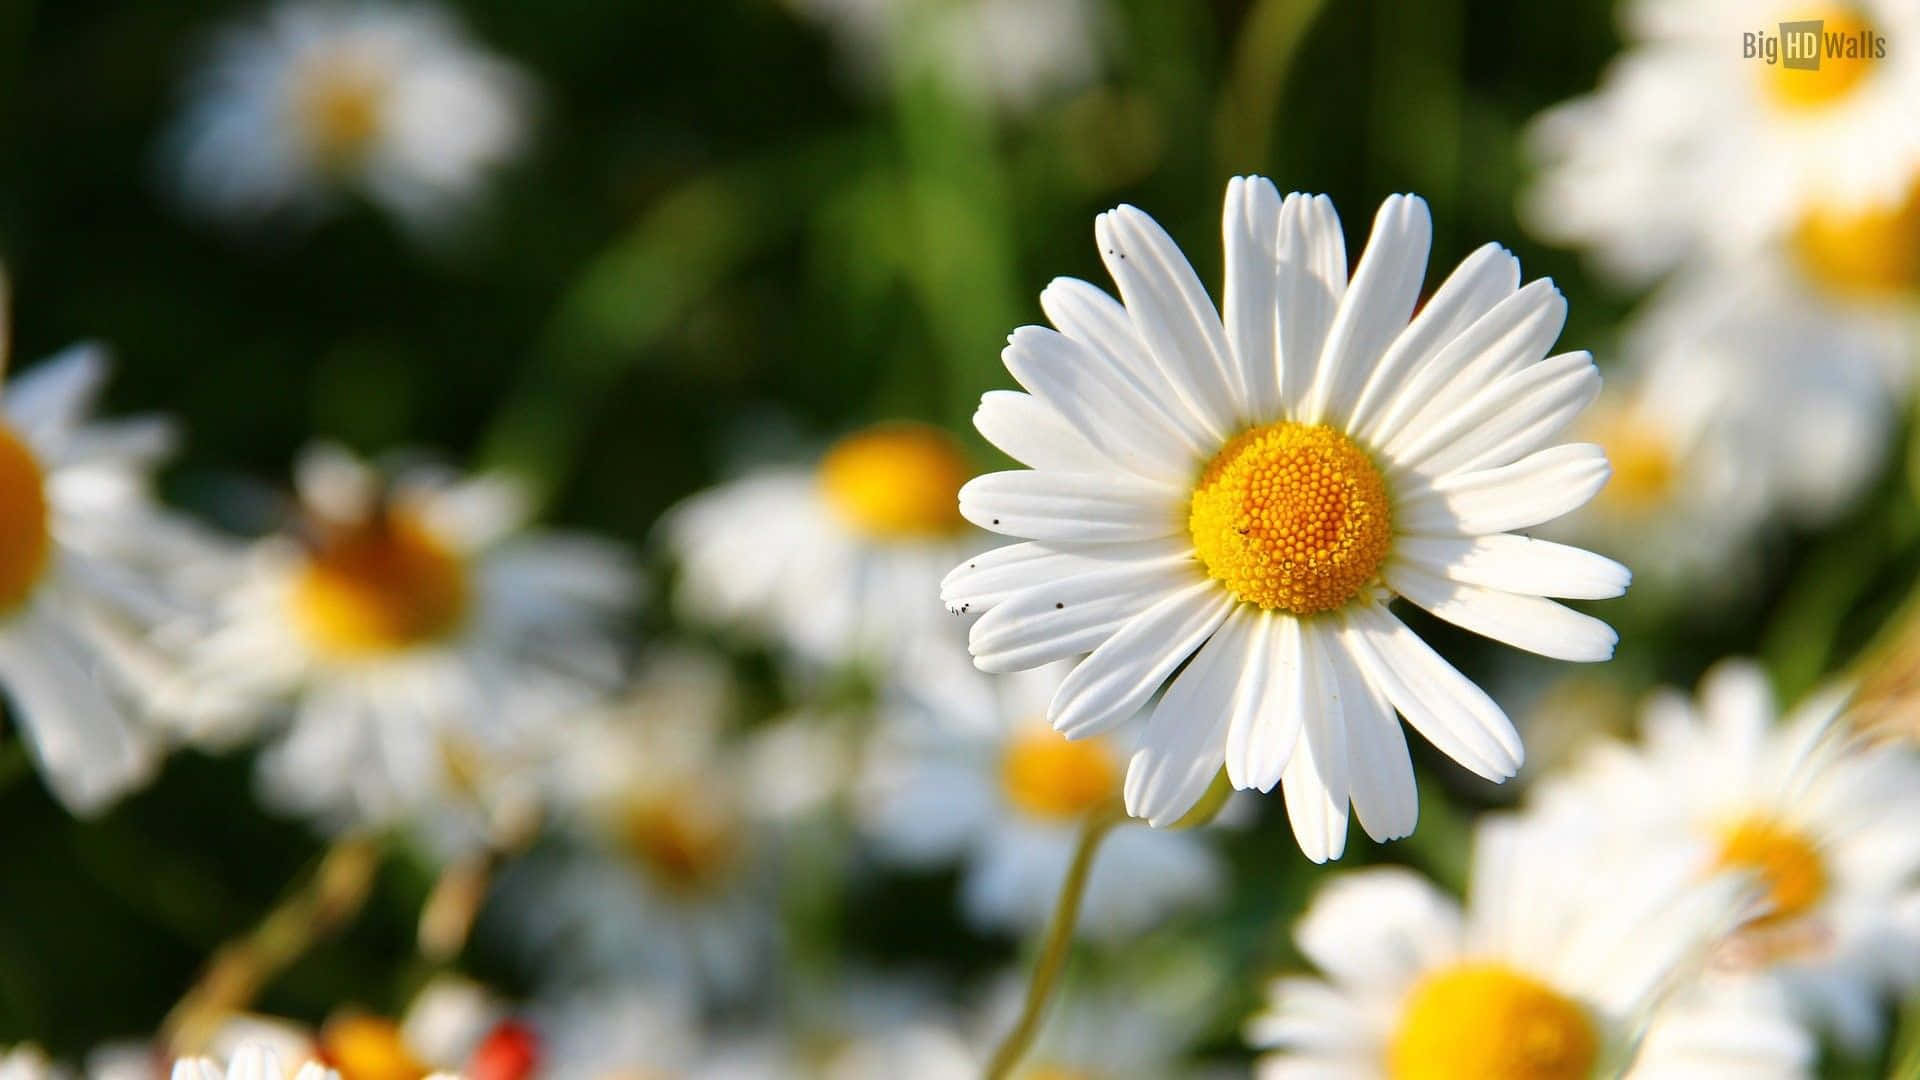 A beautiful daisy flower basking in the sunlight Wallpaper